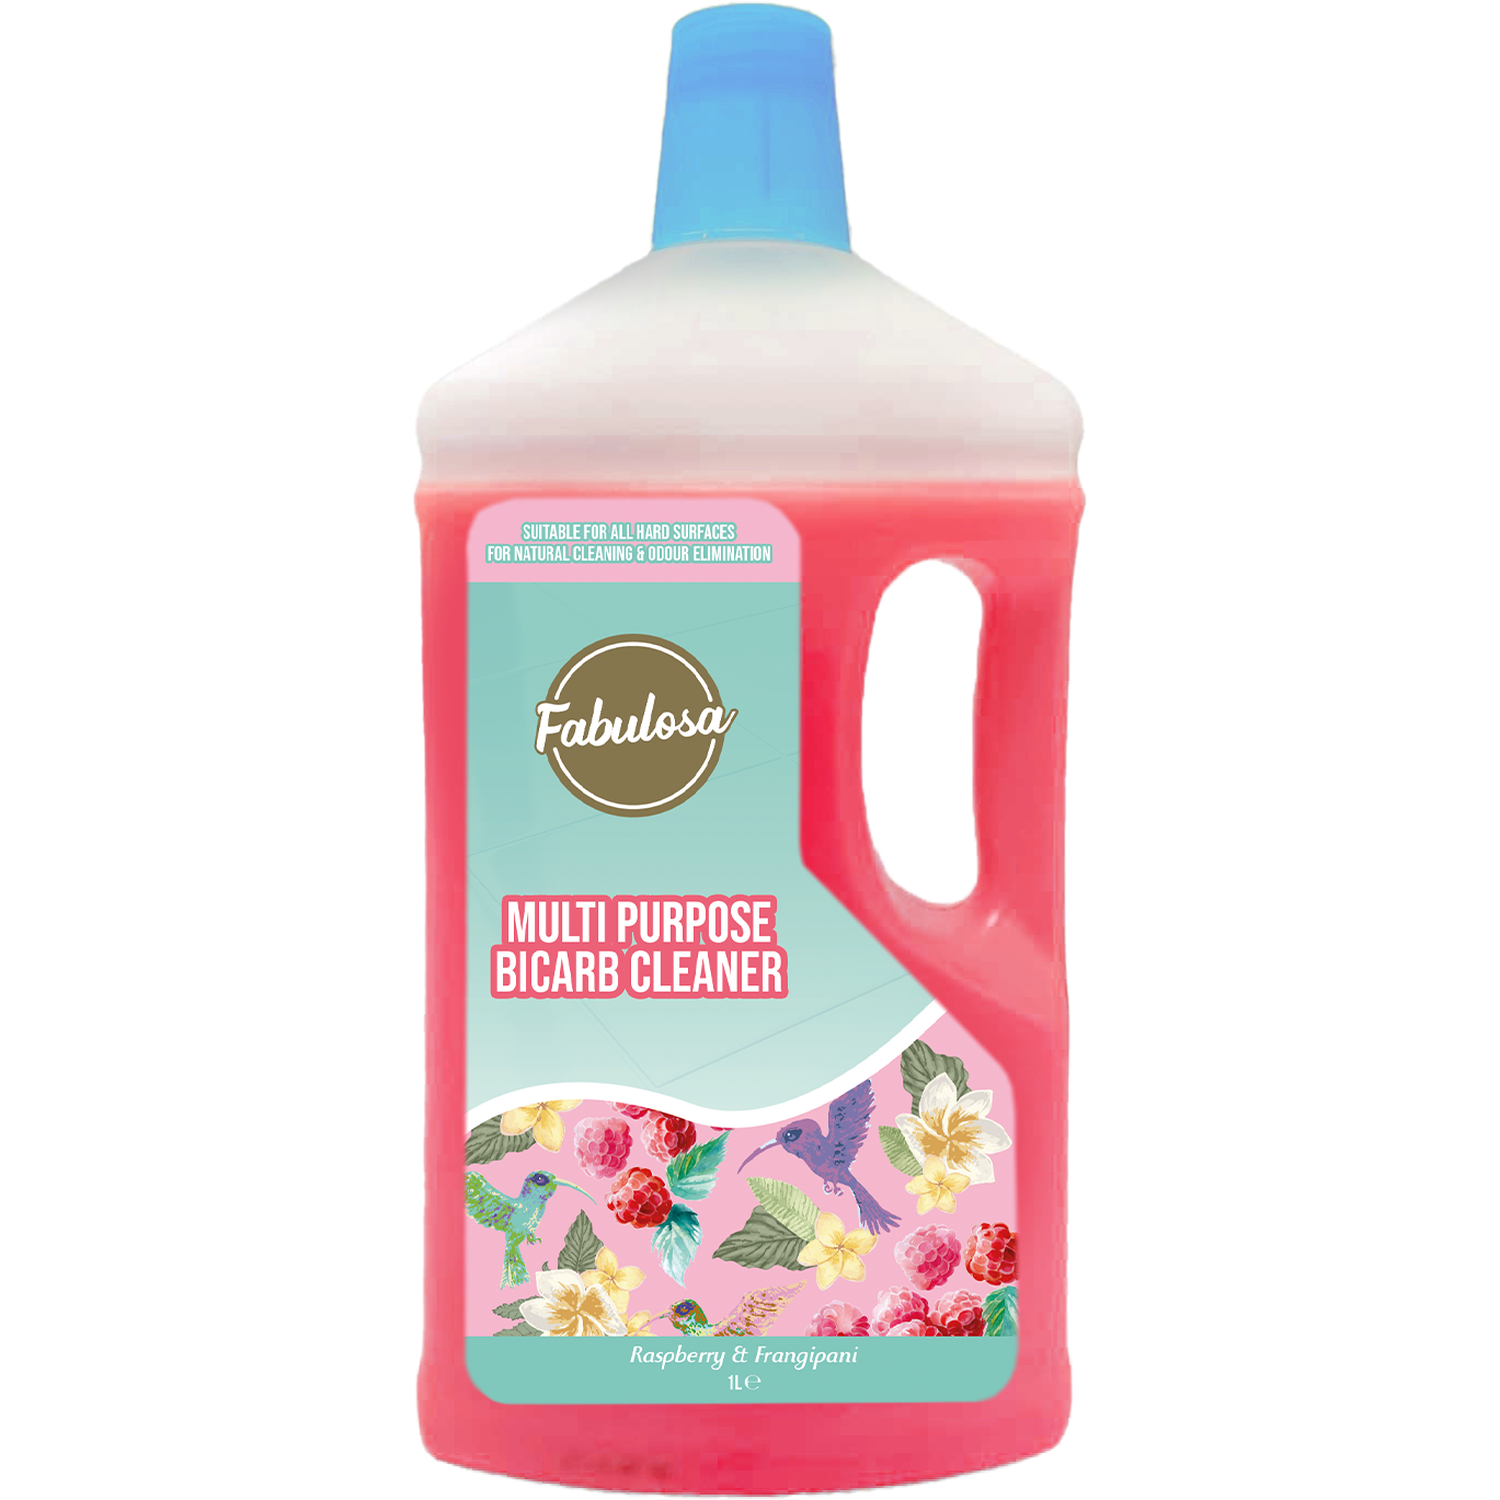 Fabulosa Multipurpose Bicarb Cleaner 1L - Raspberry and Frangipani Image